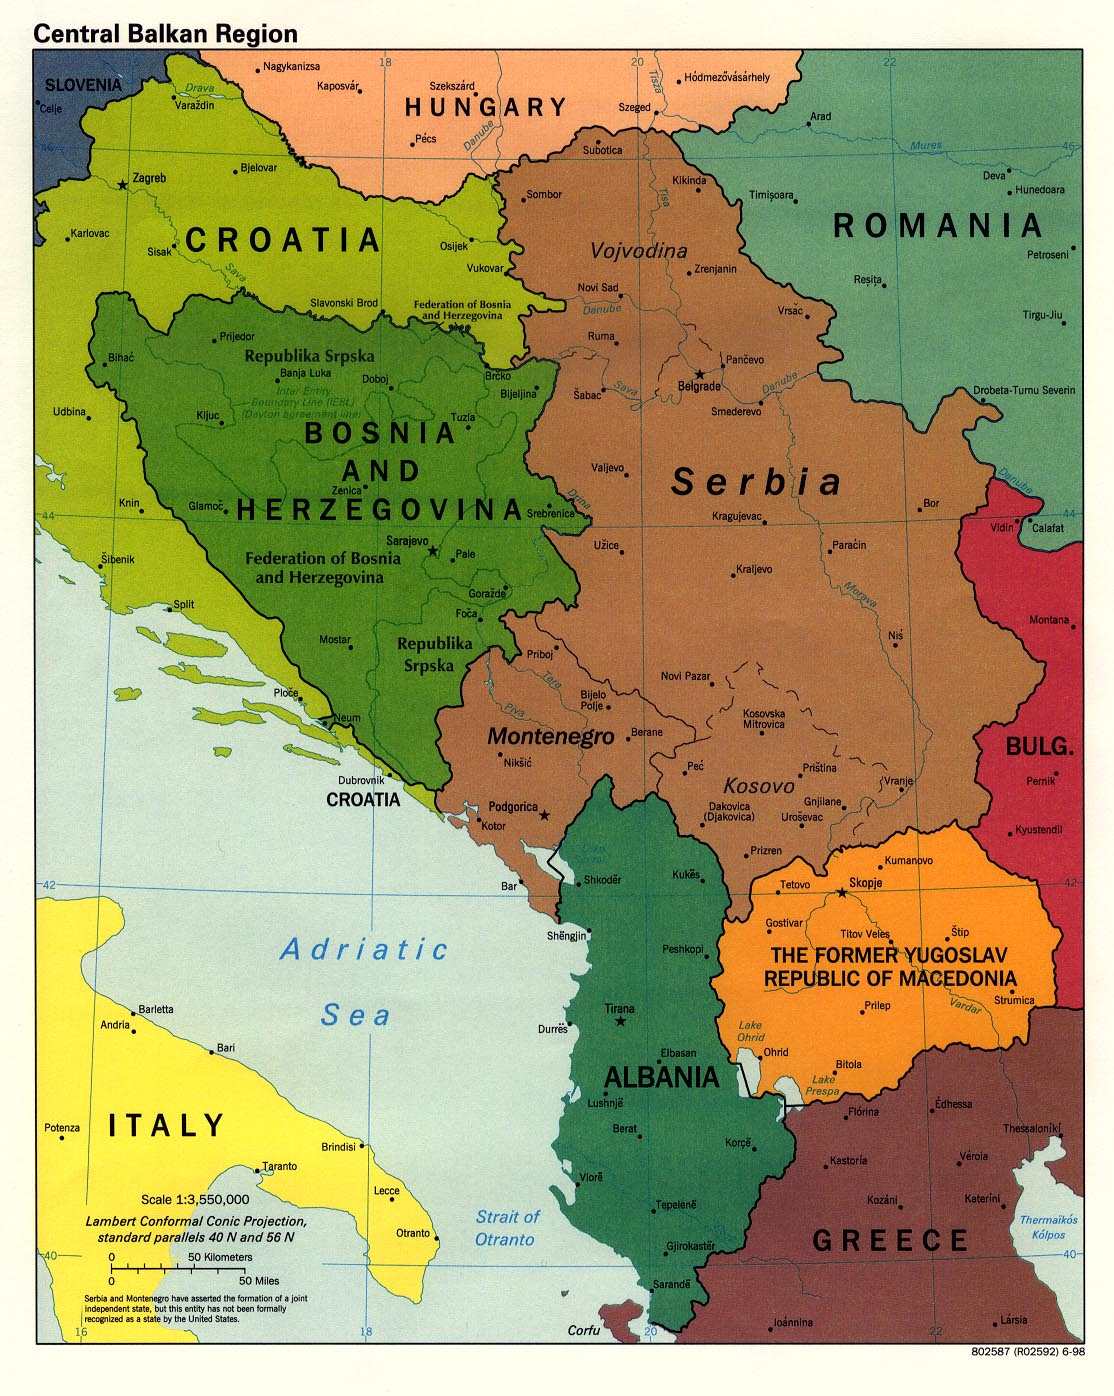 Balkans Travel : Itinerary & Summary | Visions of Travel